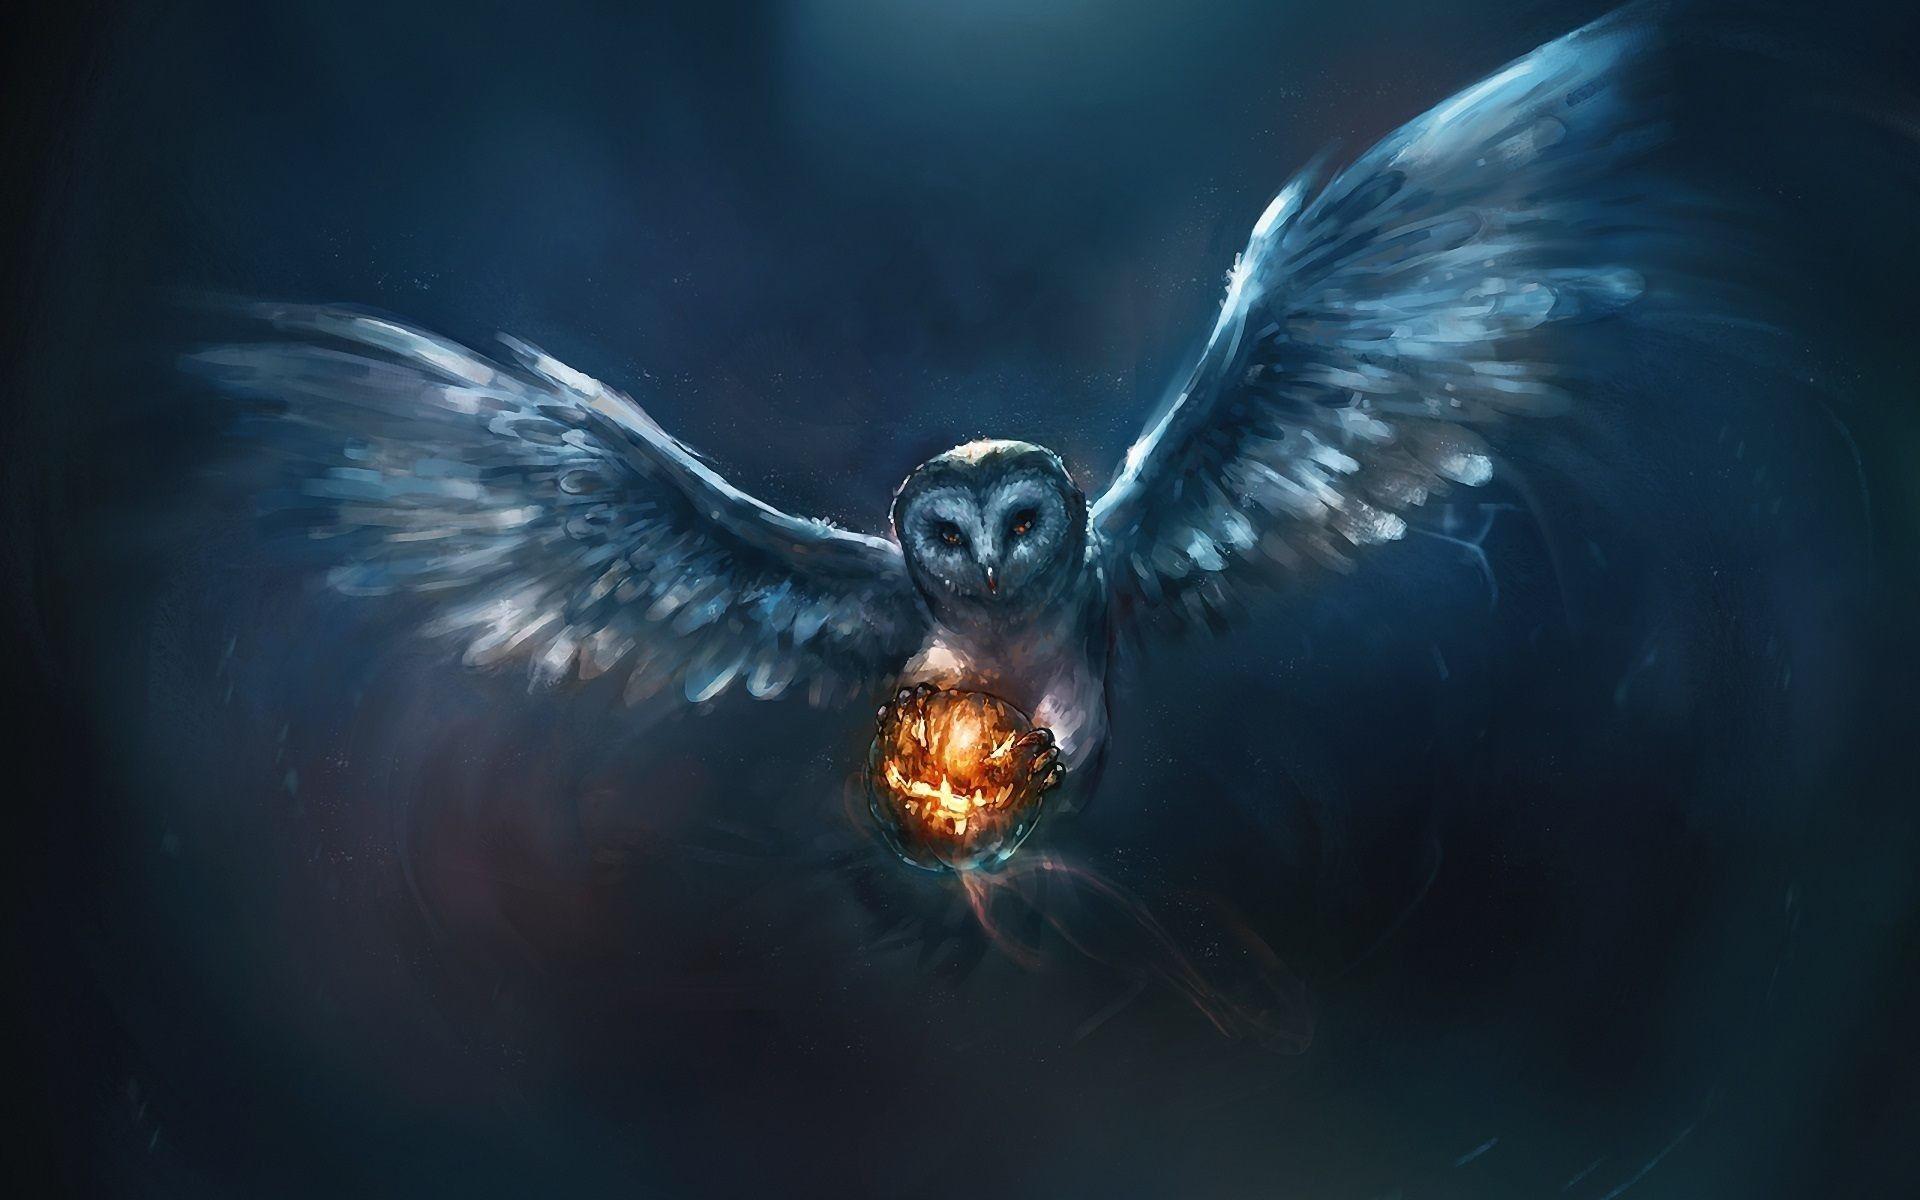 Blue Hair Owl Digital Art - wide 4